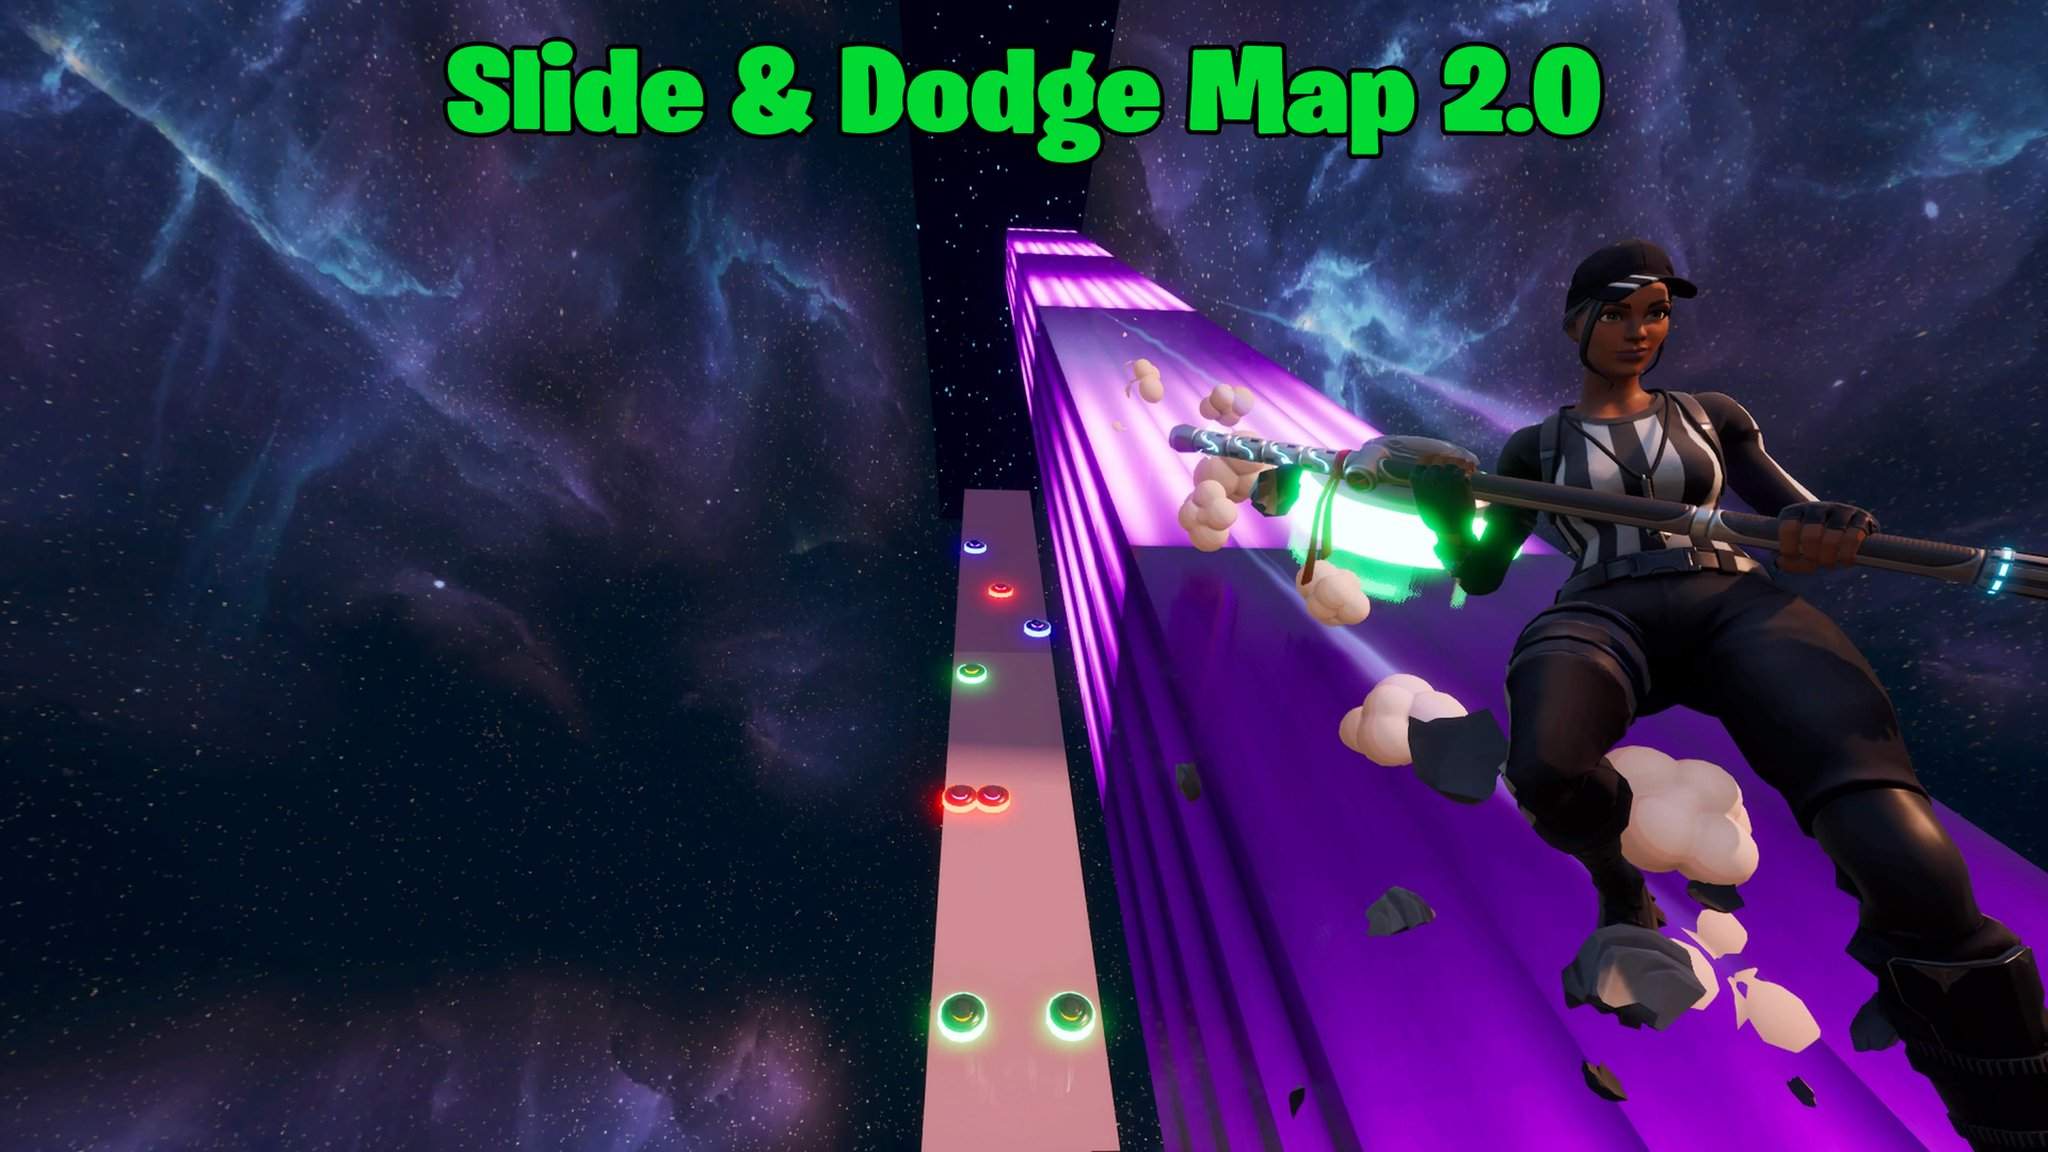 Slide Map Fortnite Creative Slide Amp Dodge 2 0 Fortnite Creative Mini Games Parkour And Deathrun Map Code